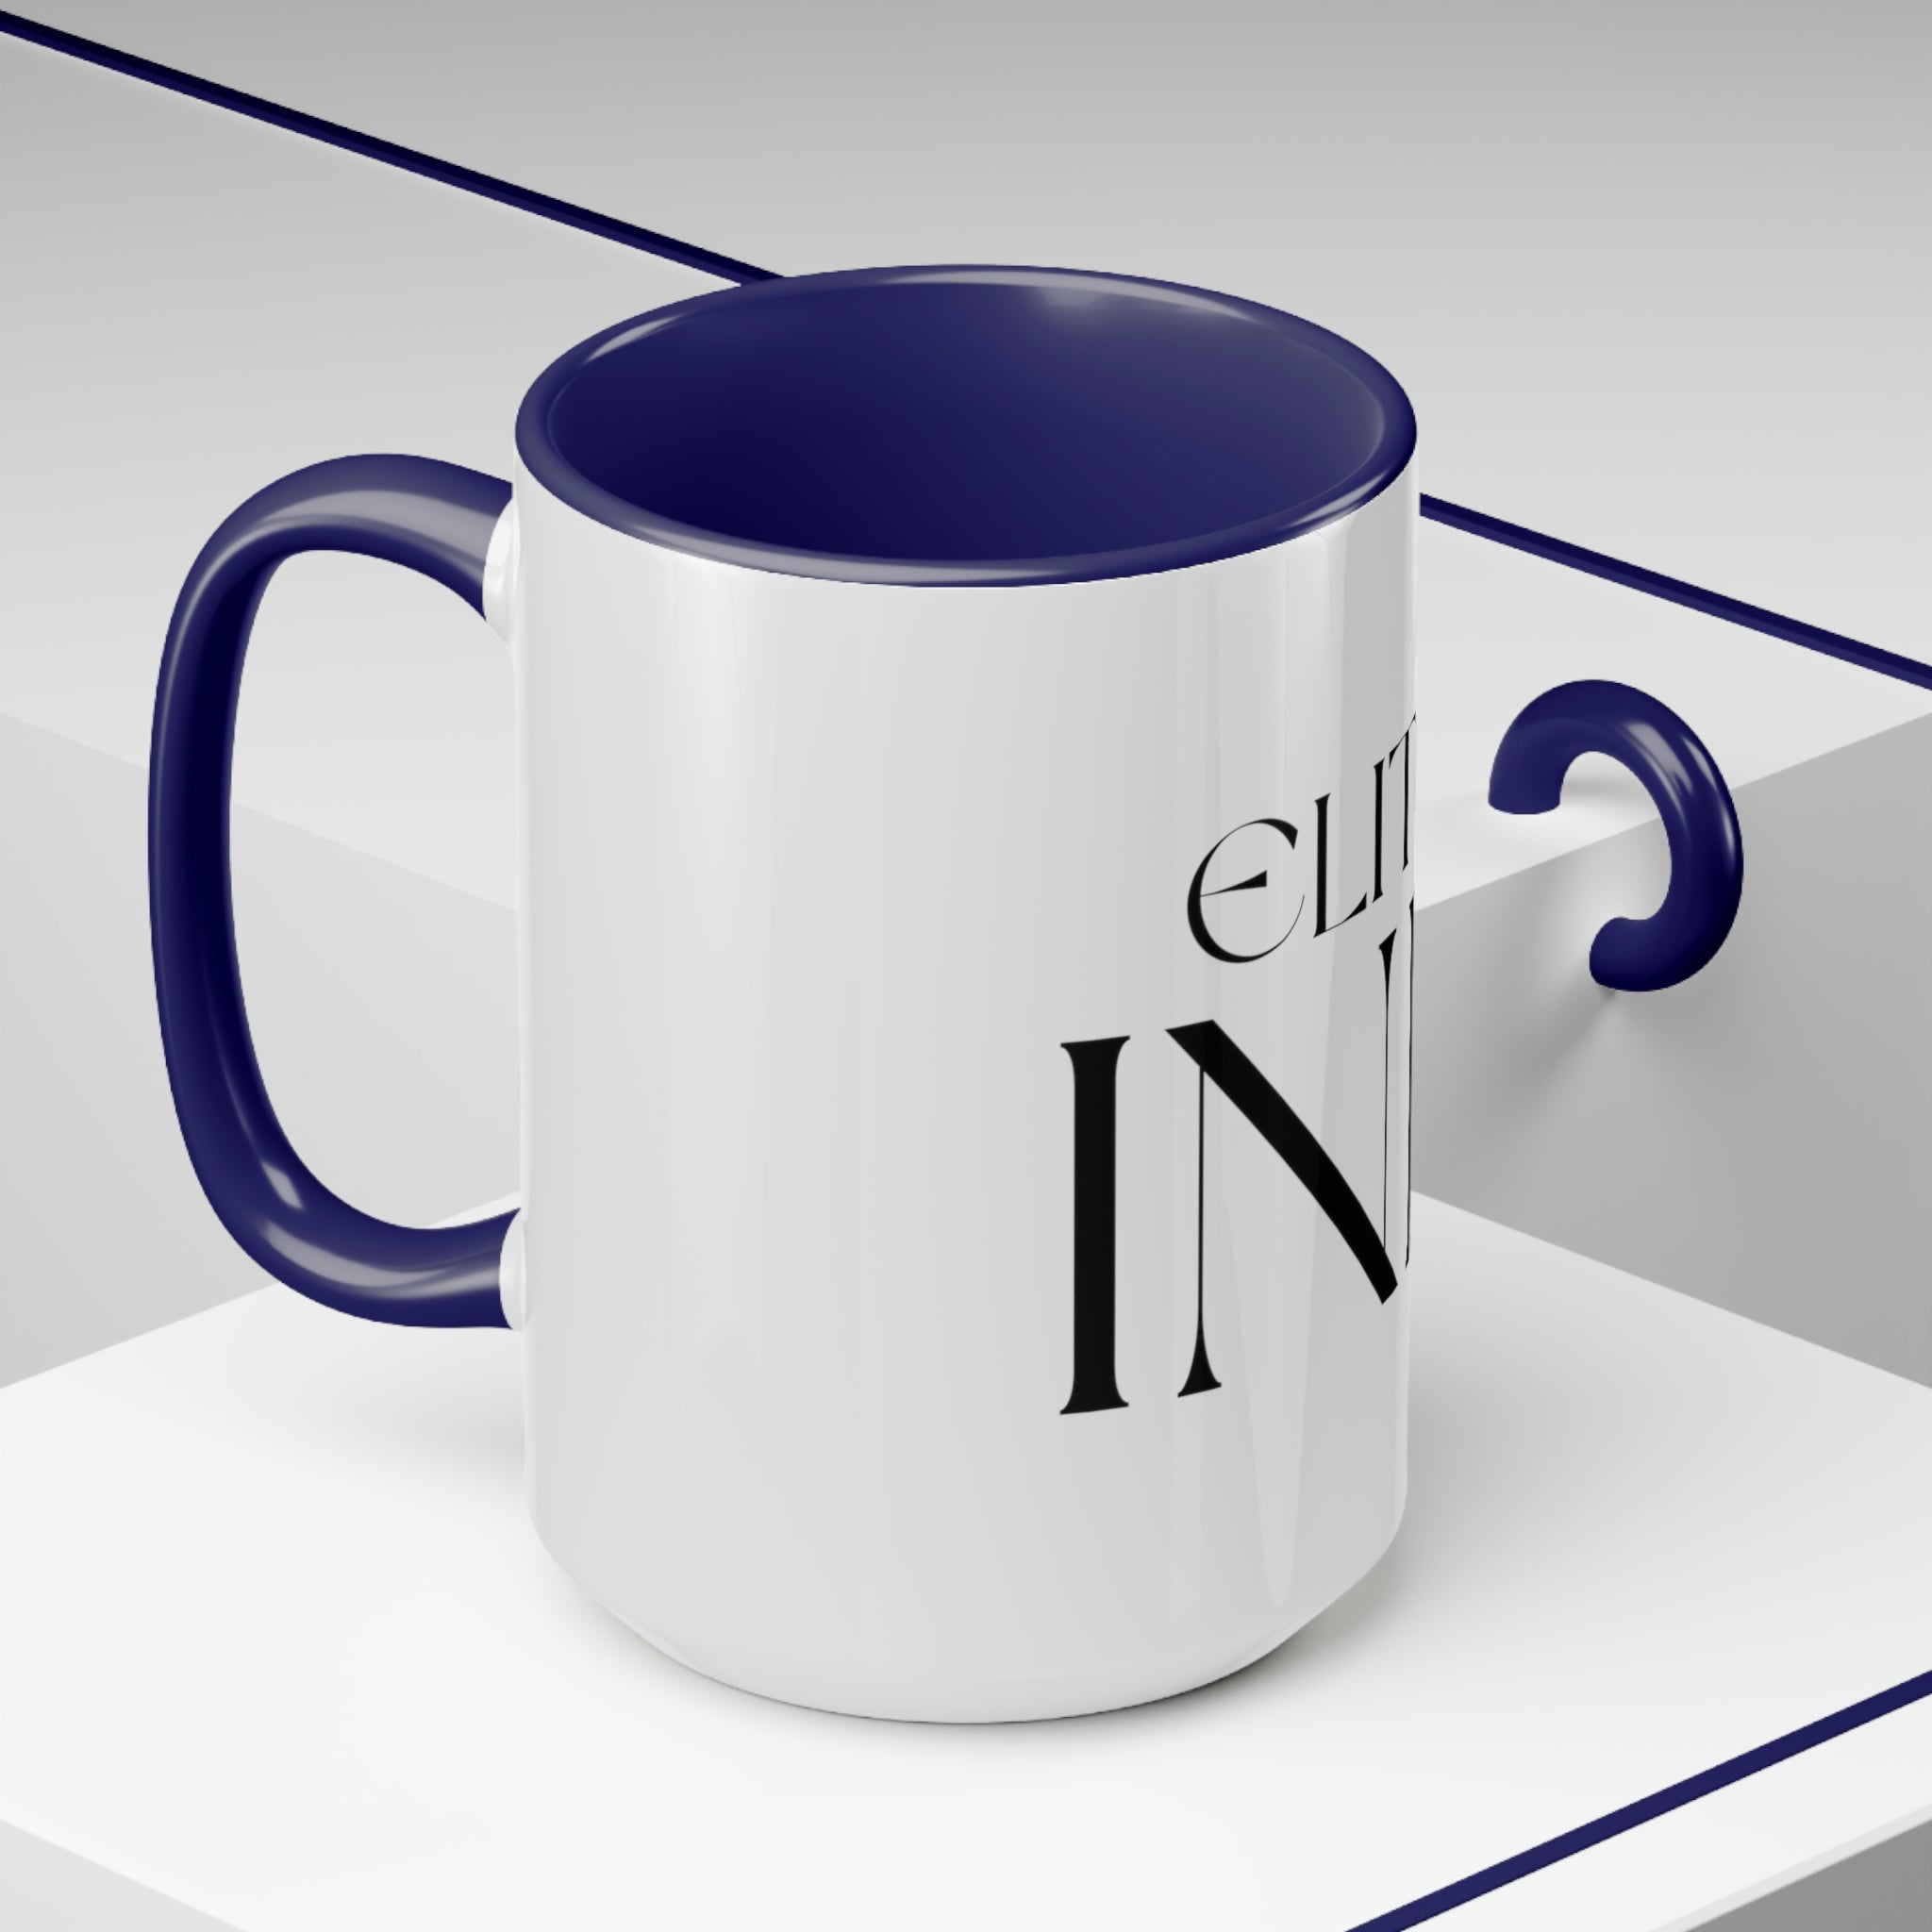 Elite Ink Coffee Mugs, 15oz